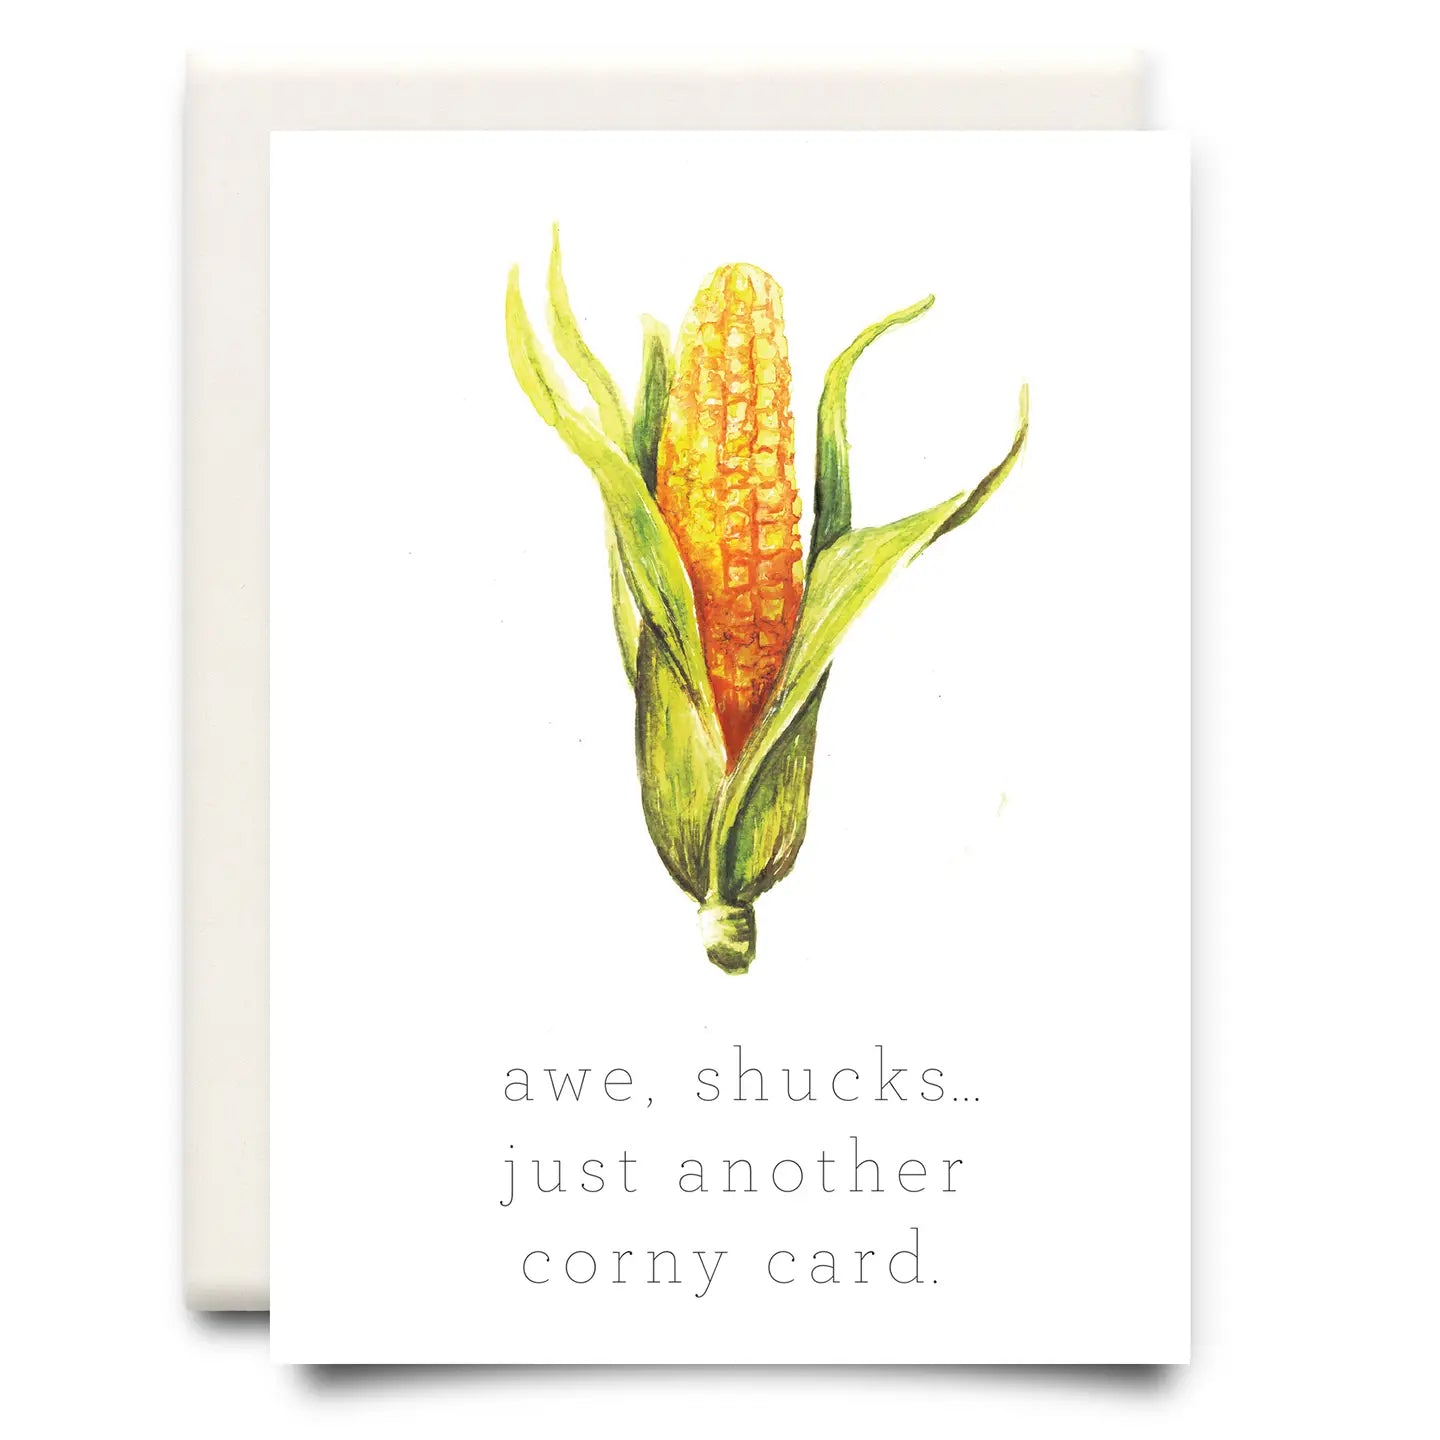 Inkwell Cards “Awe, Shucks” Corny Card